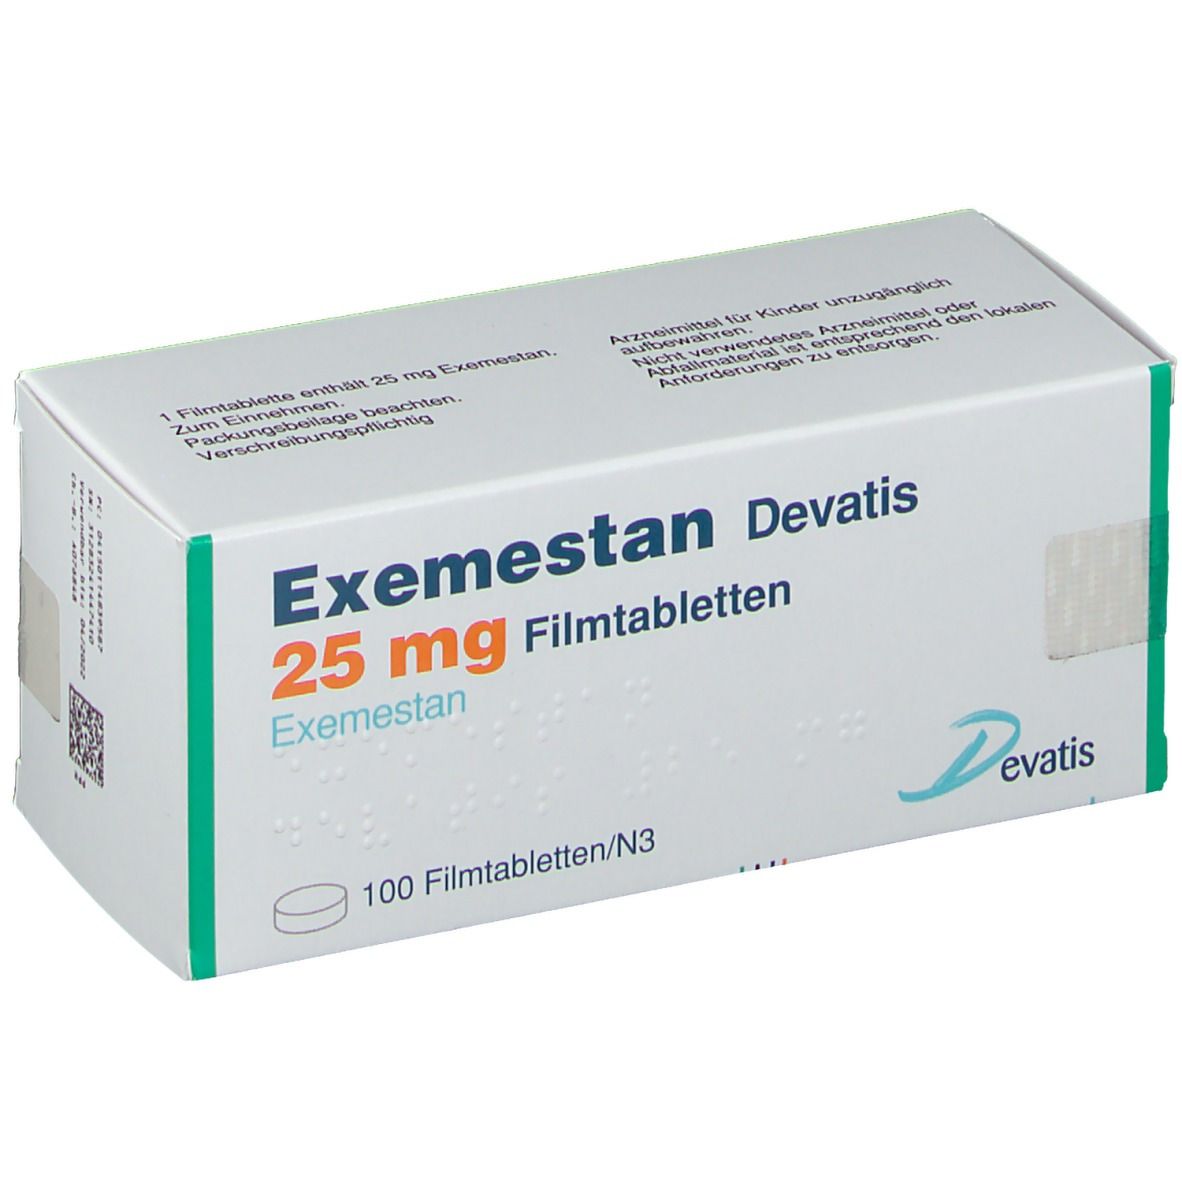 Exemestan Devatis 25 mg